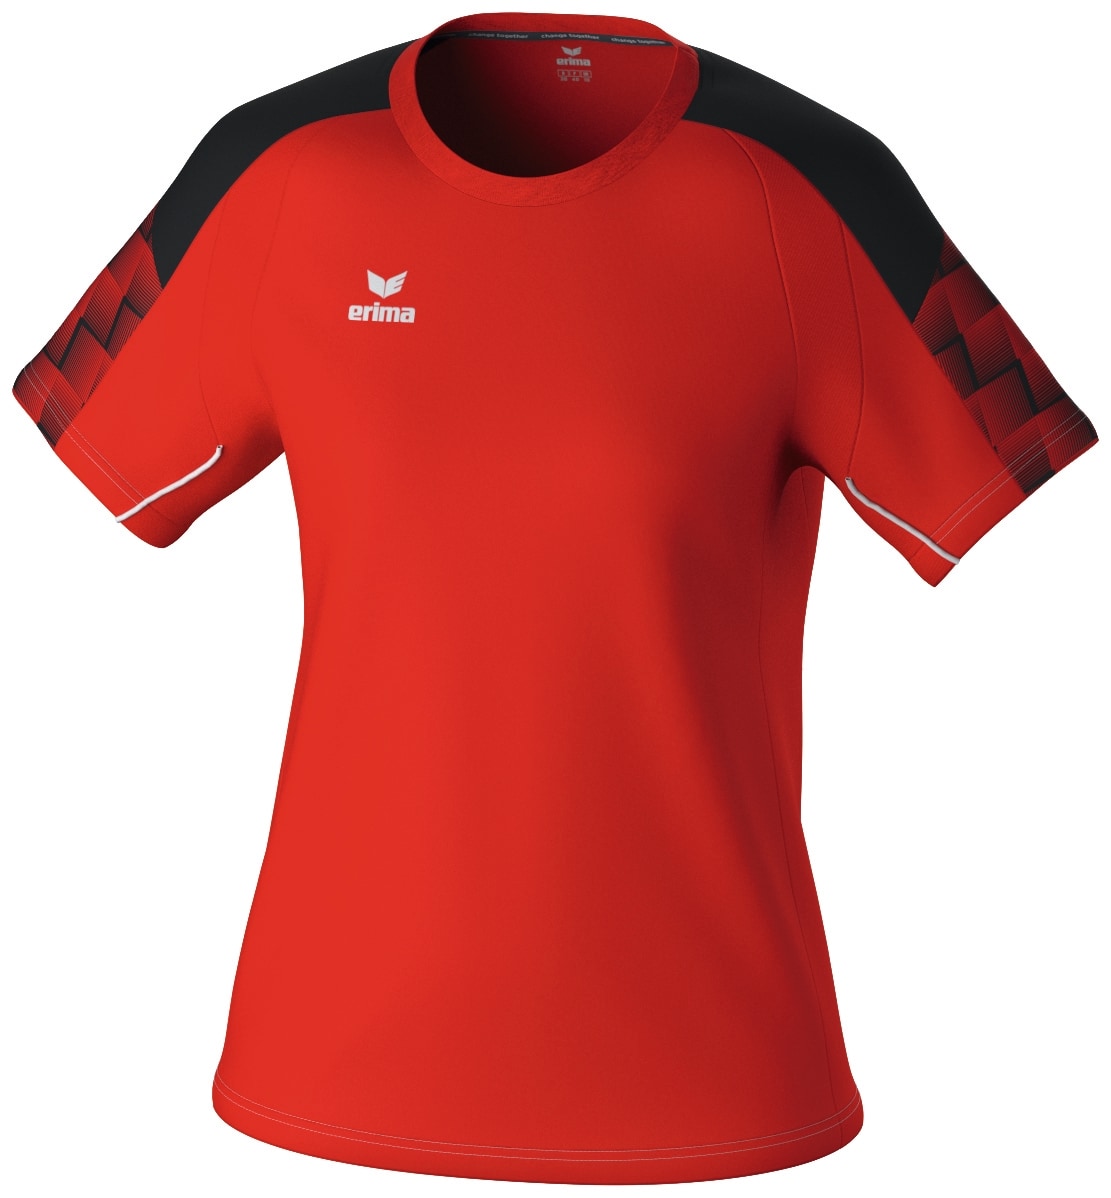 Erima Damen EVO STAR T-Shirt rot schwarz